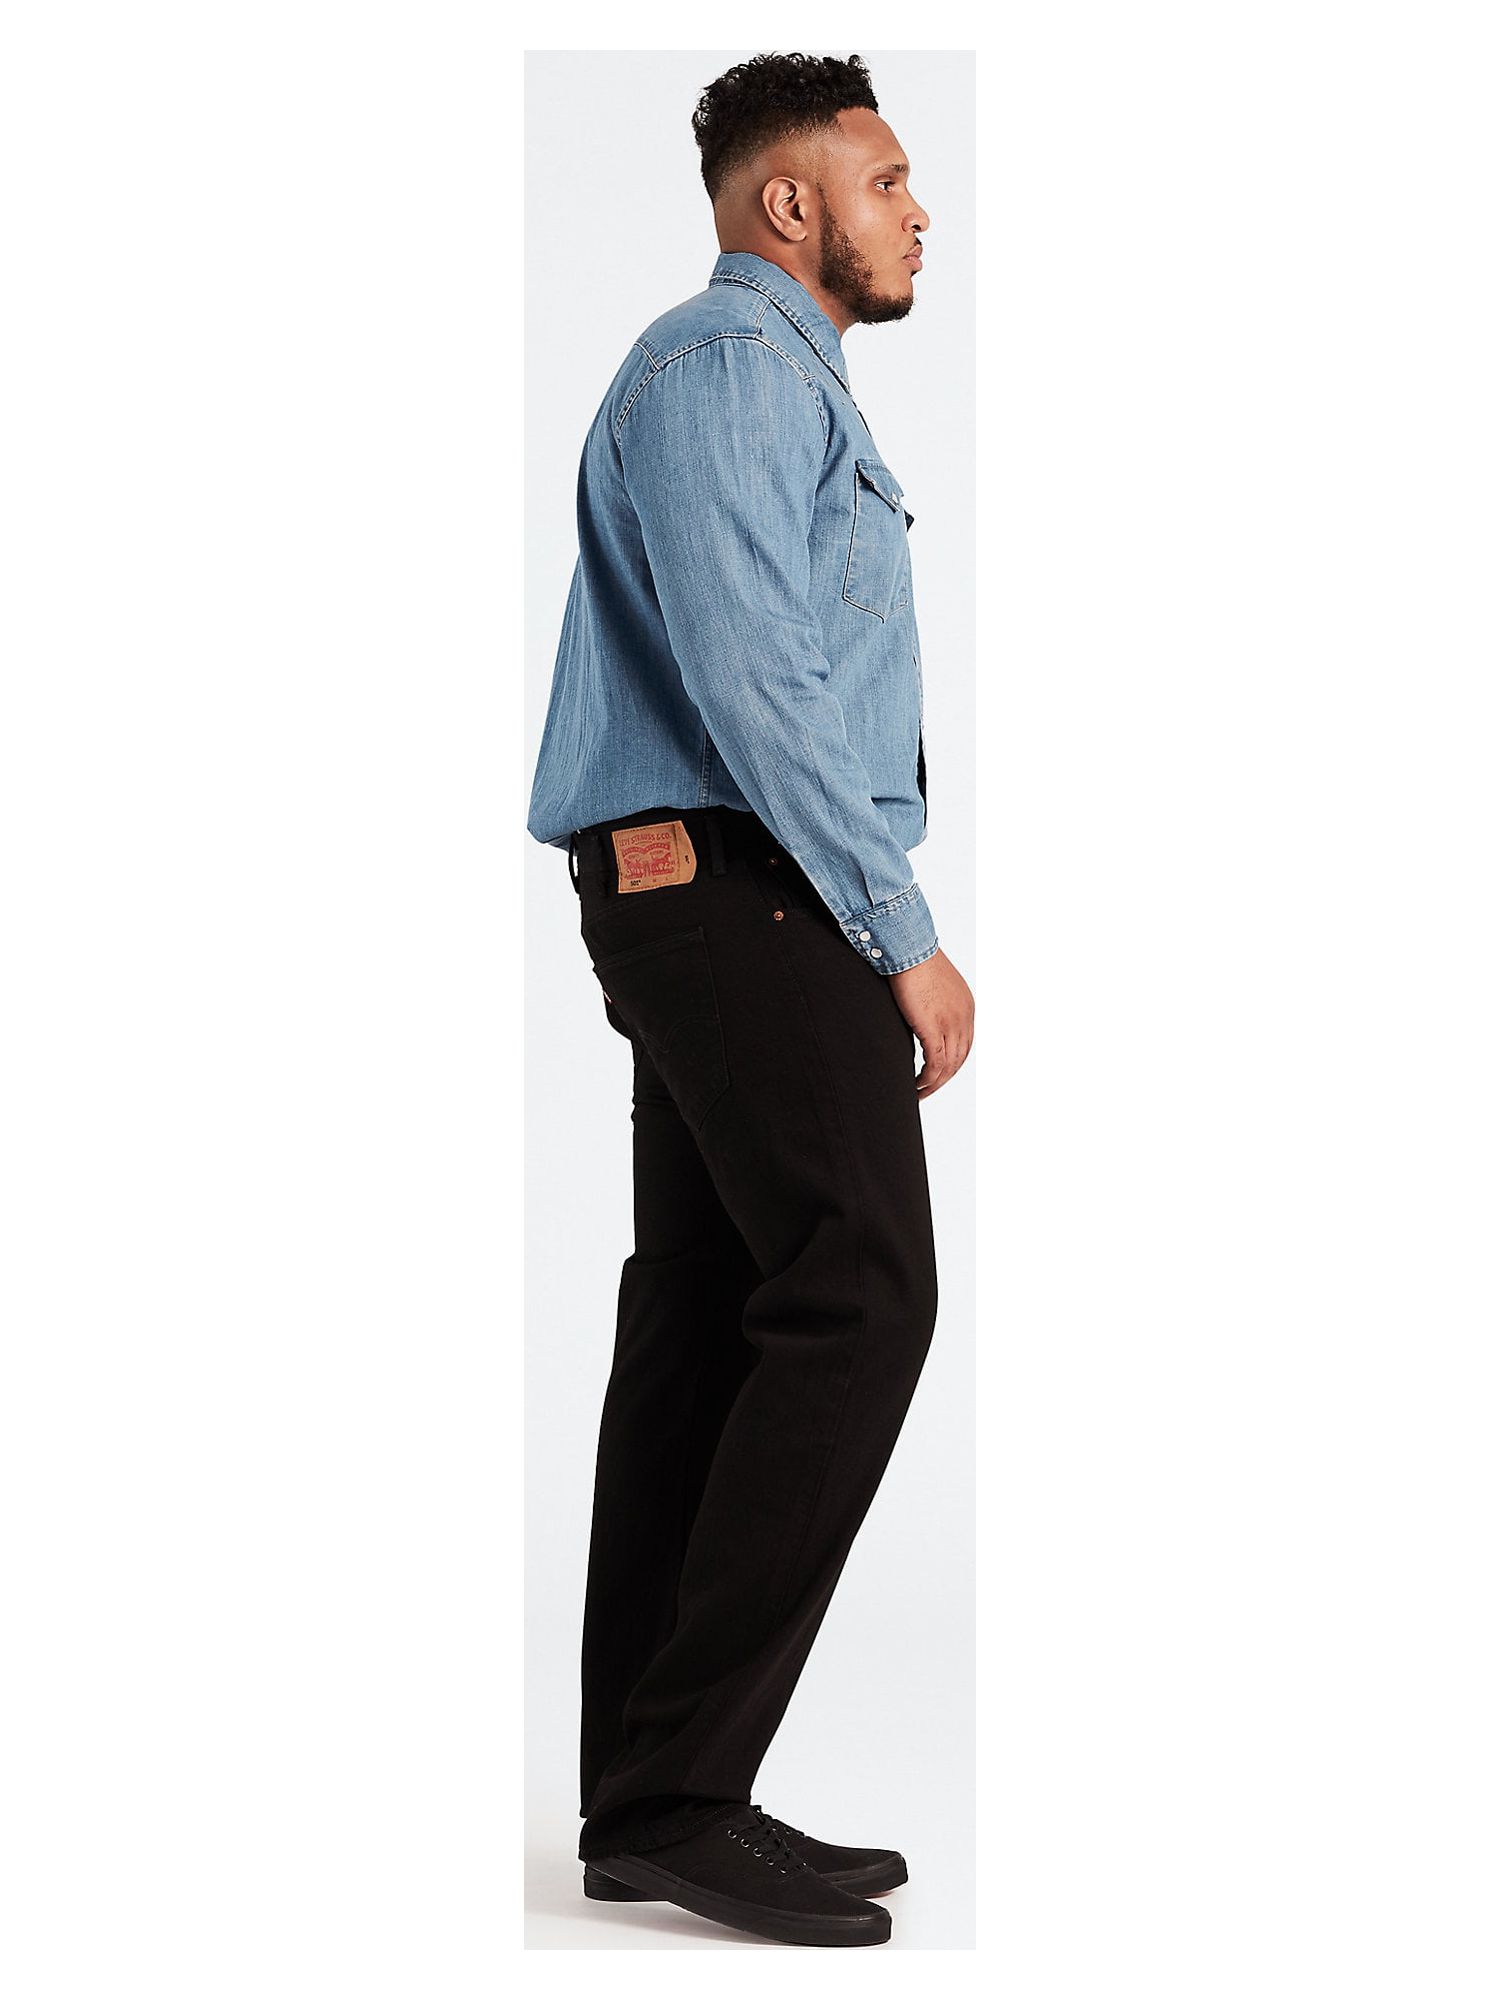 Levi's Men's Big & Tall 501 Original Fit Jeans - image 8 of 8